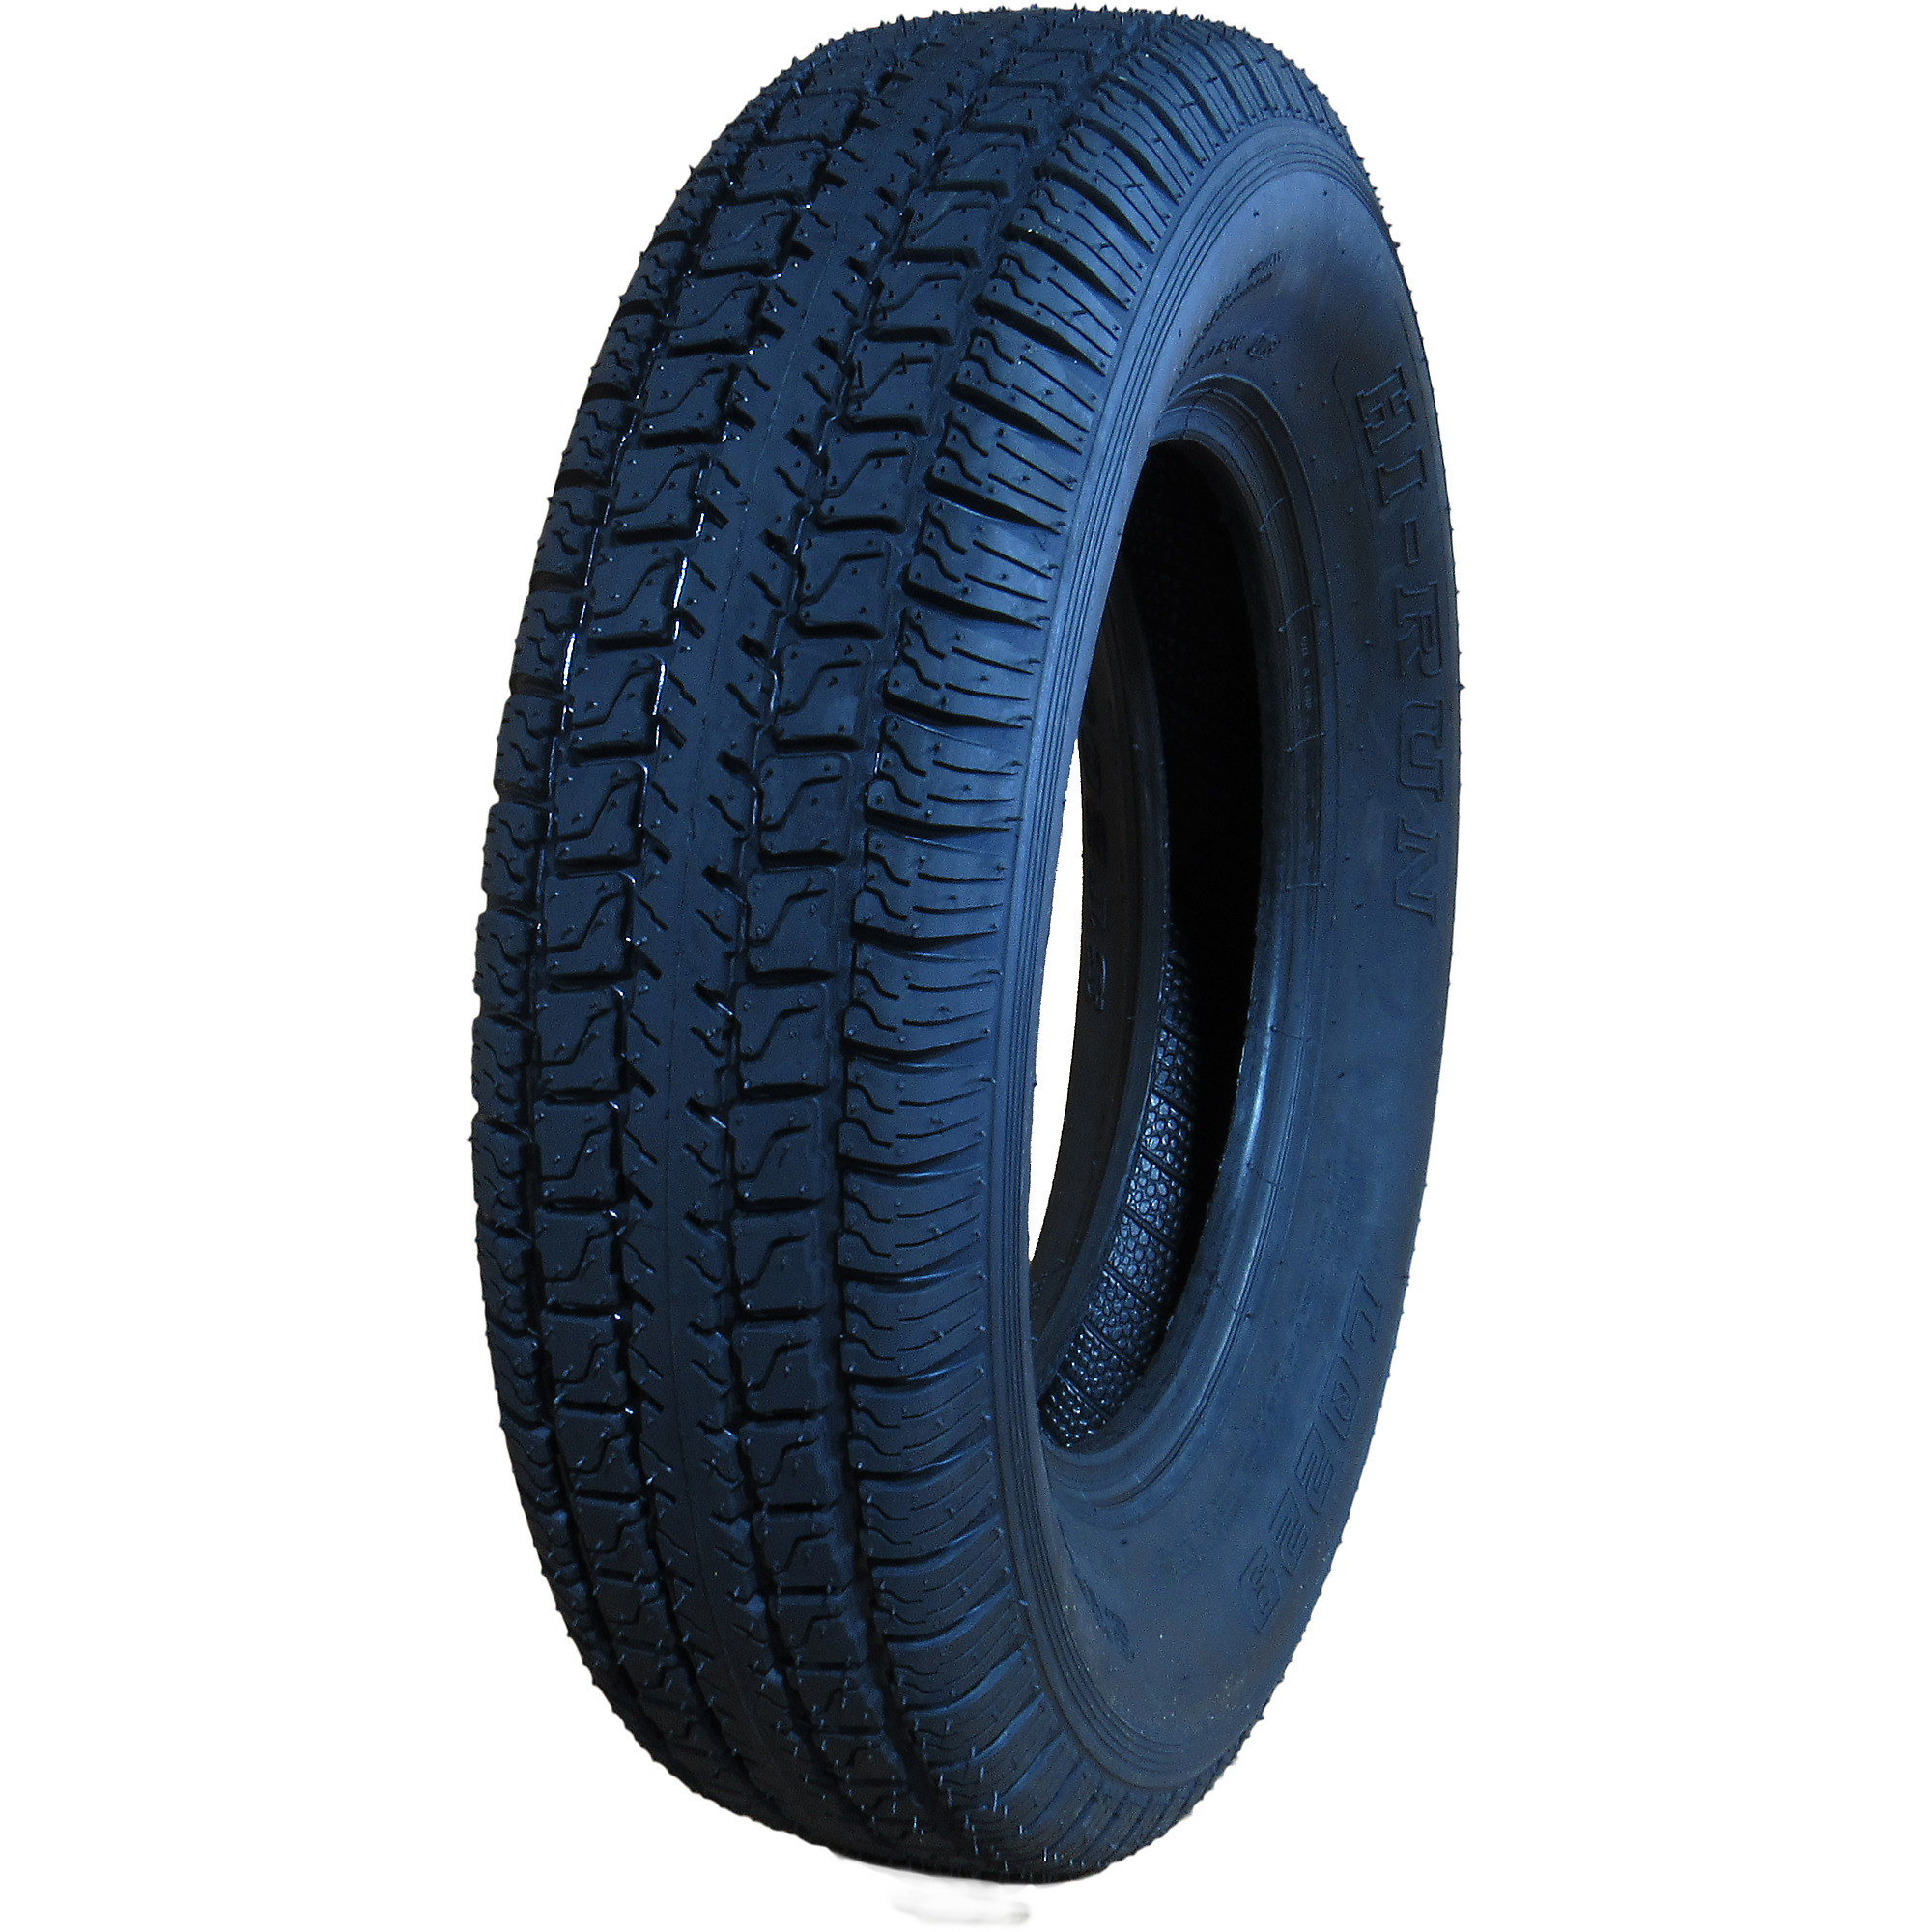 HI-RUN, Highway Trailer Tire, Bias-ply, Tire Size ST175/80D13 Load Range Rating C, Model LZ1003